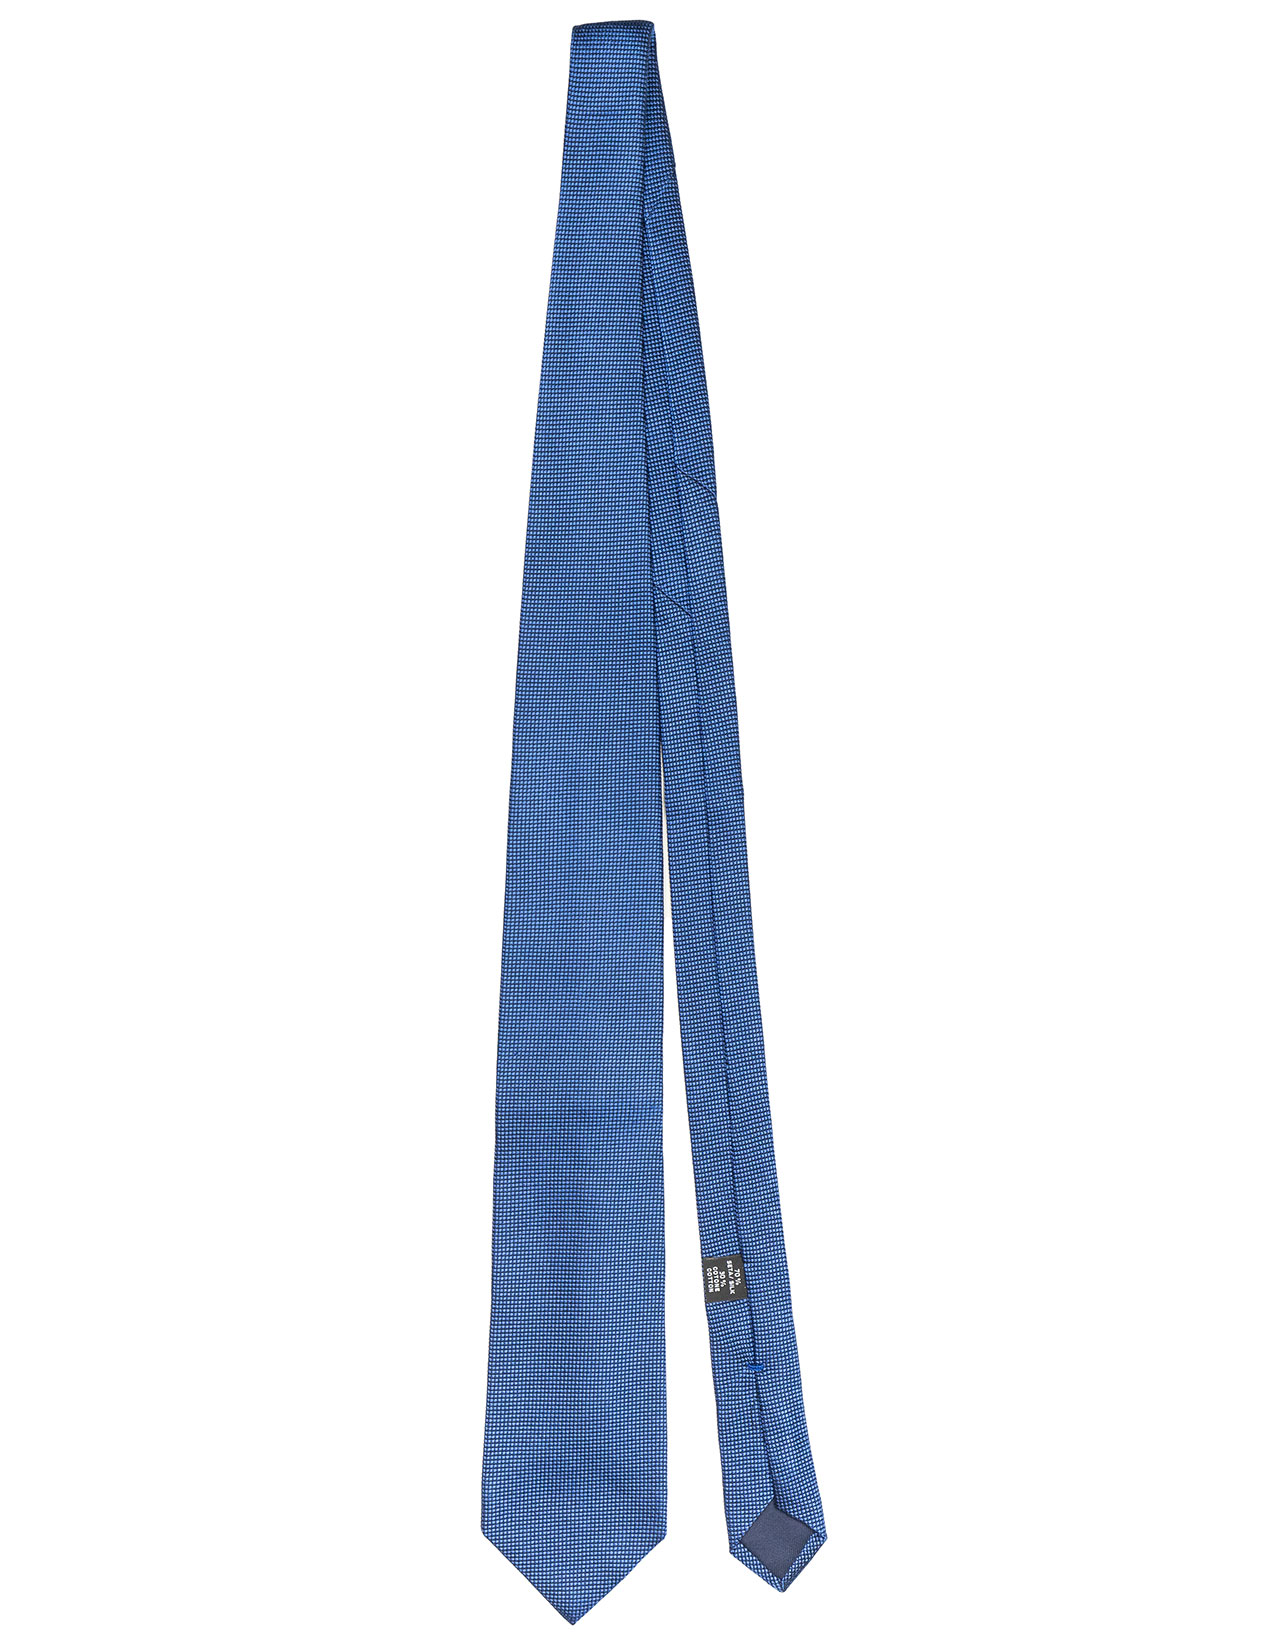 Cesare Attolini Krawatte in blau mit Struktur